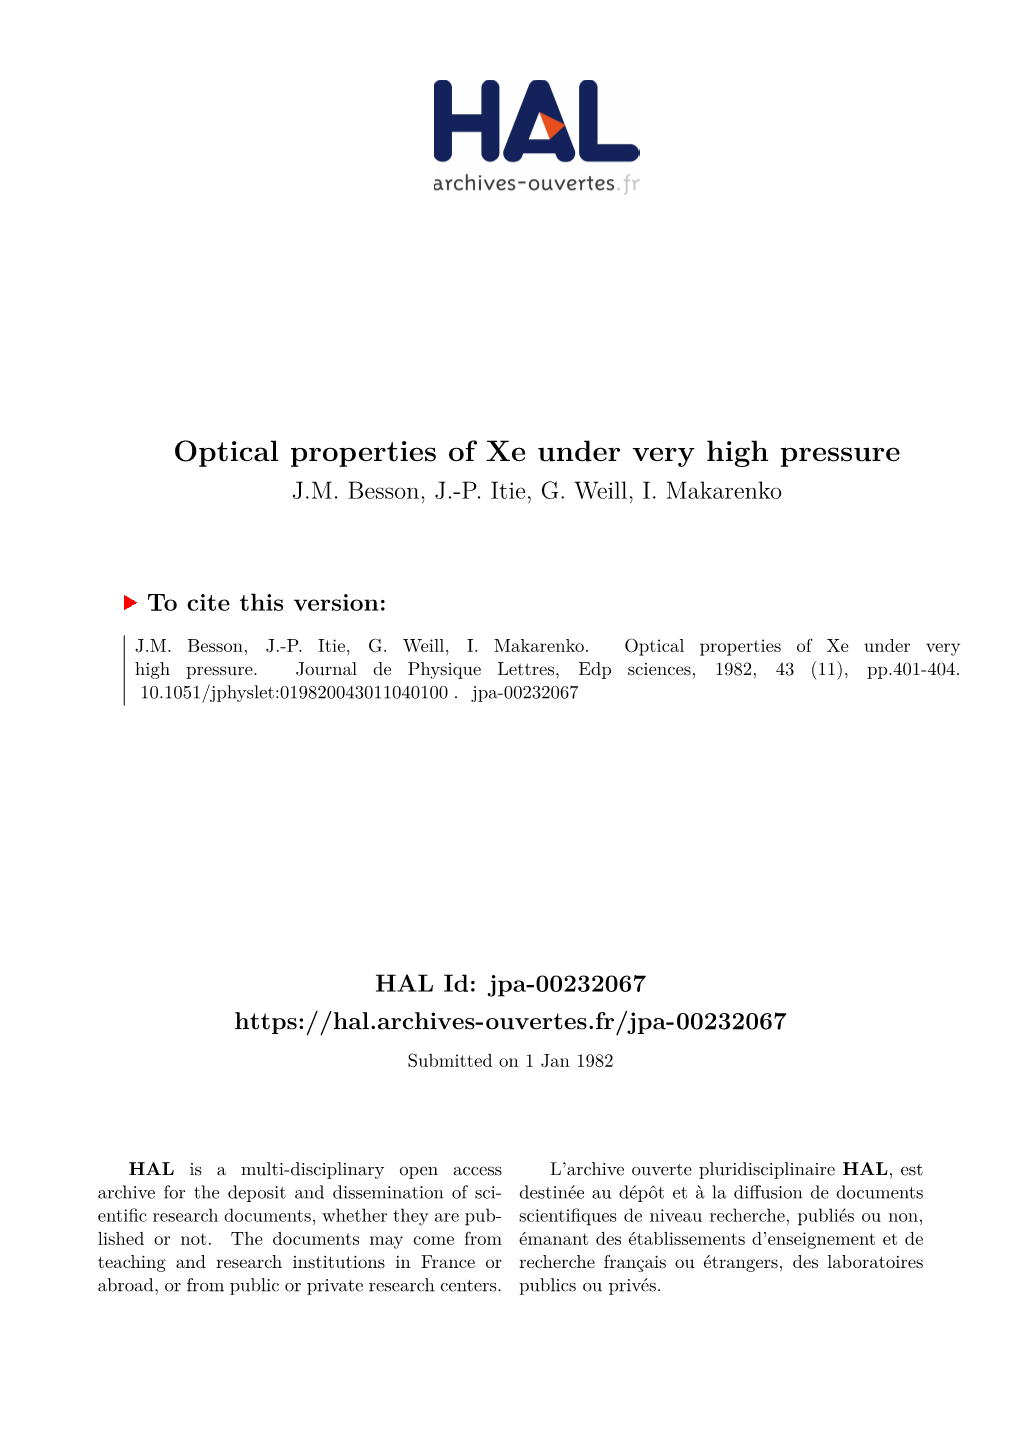 Optical Properties of Xe Under Very High Pressure J.M